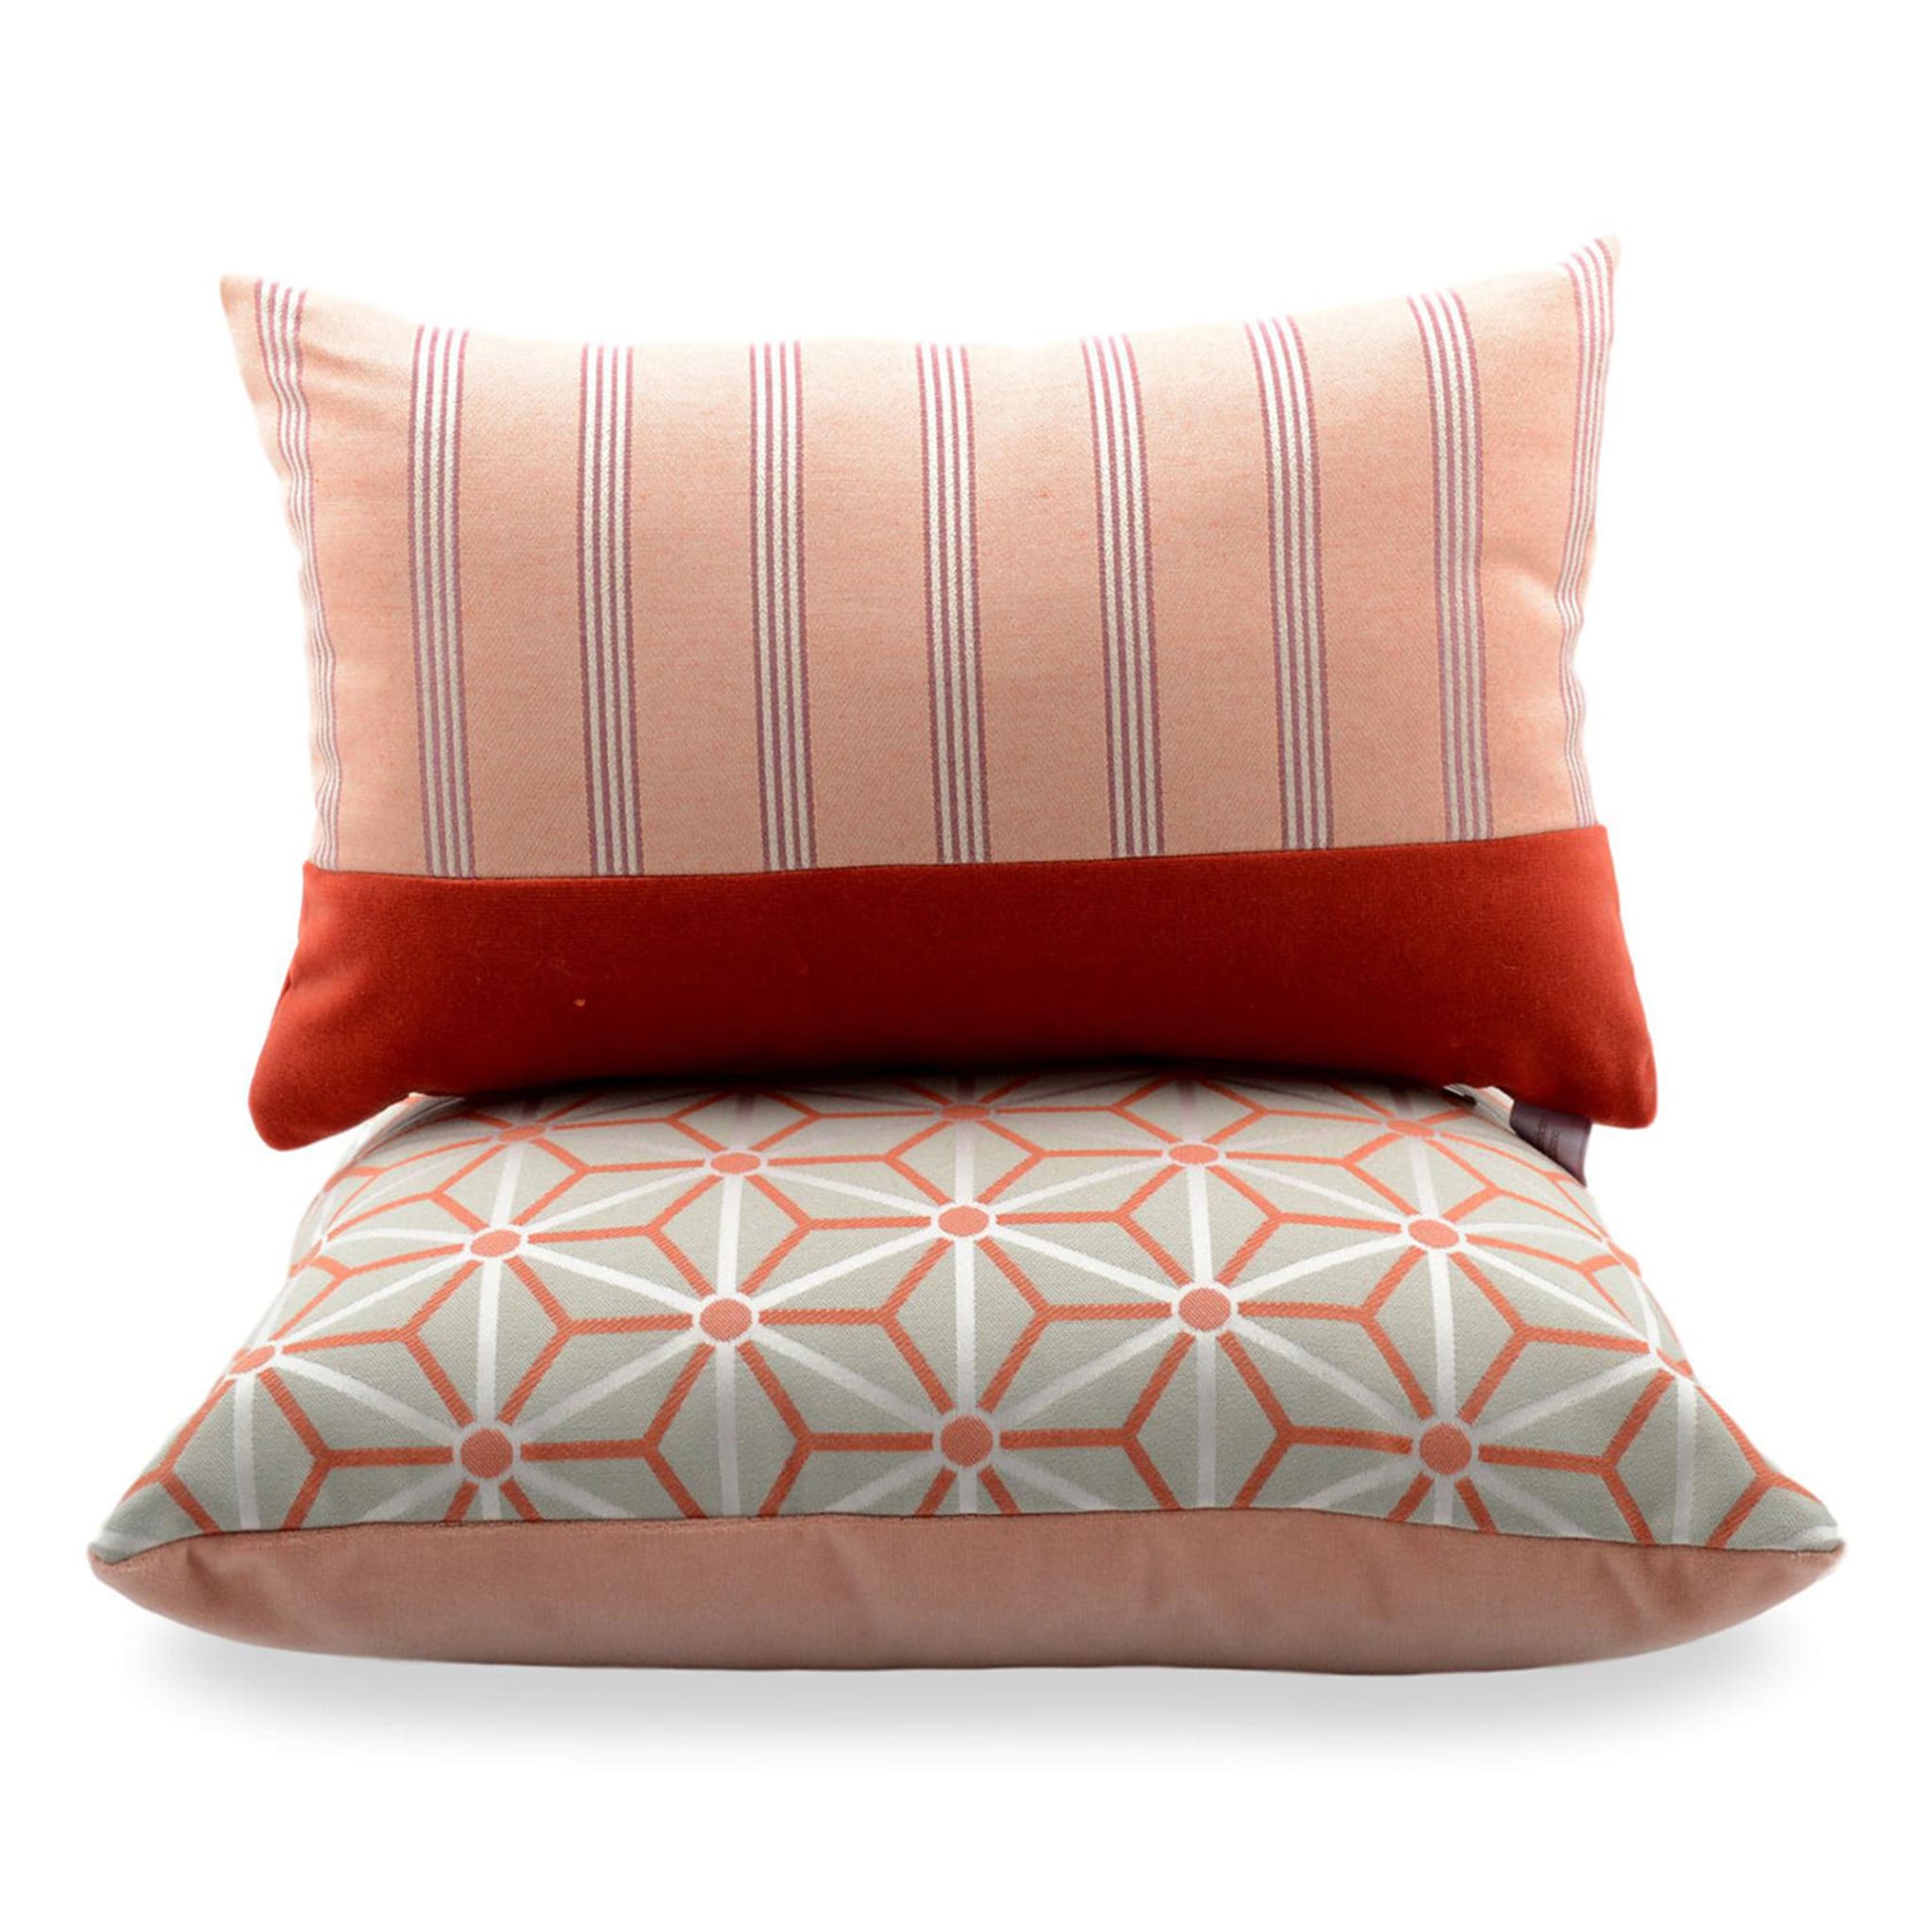 Peach Carrè Cushion in Steila jacquard fabric - Alternative view 3